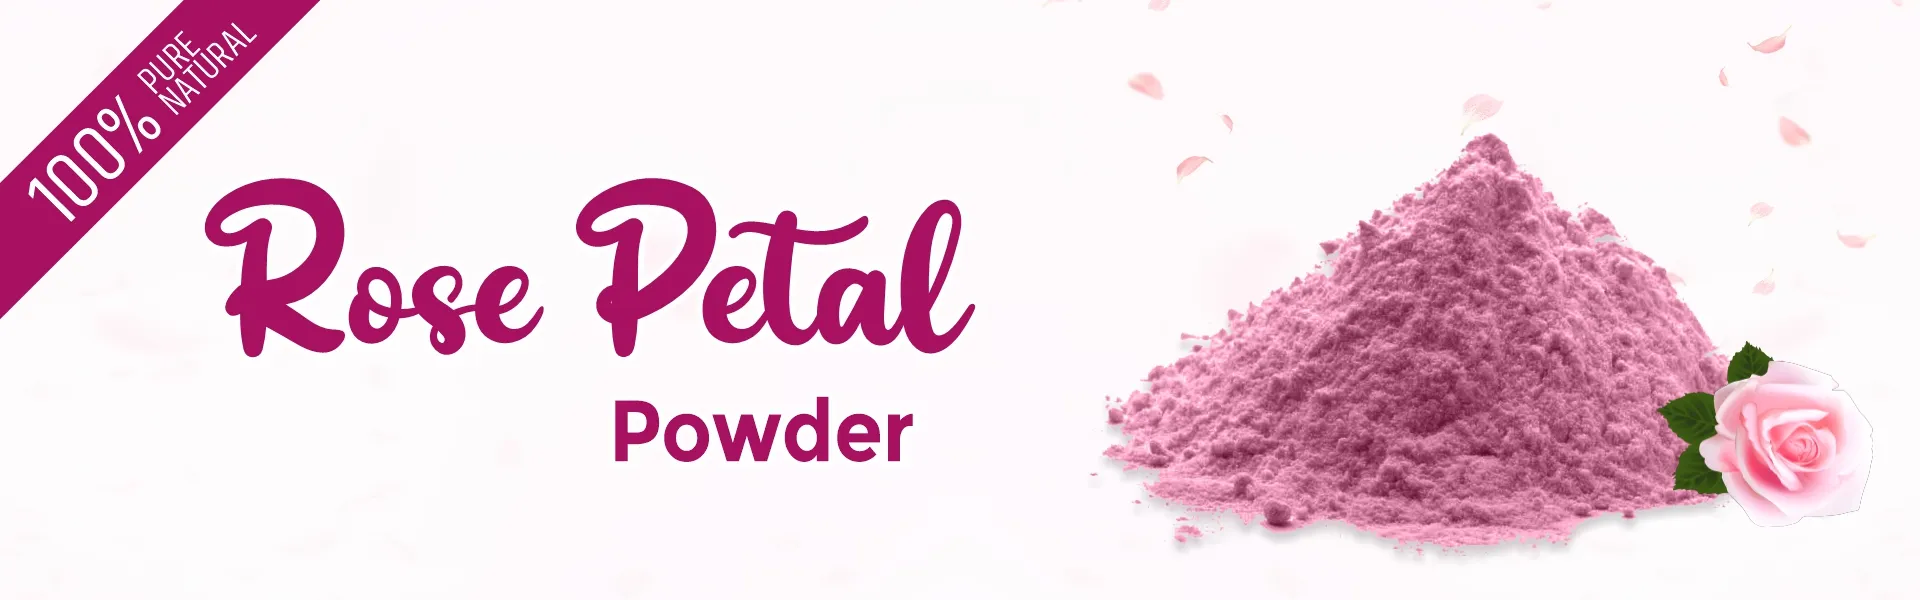 Rose Petal Powder - www.dkihenna.com